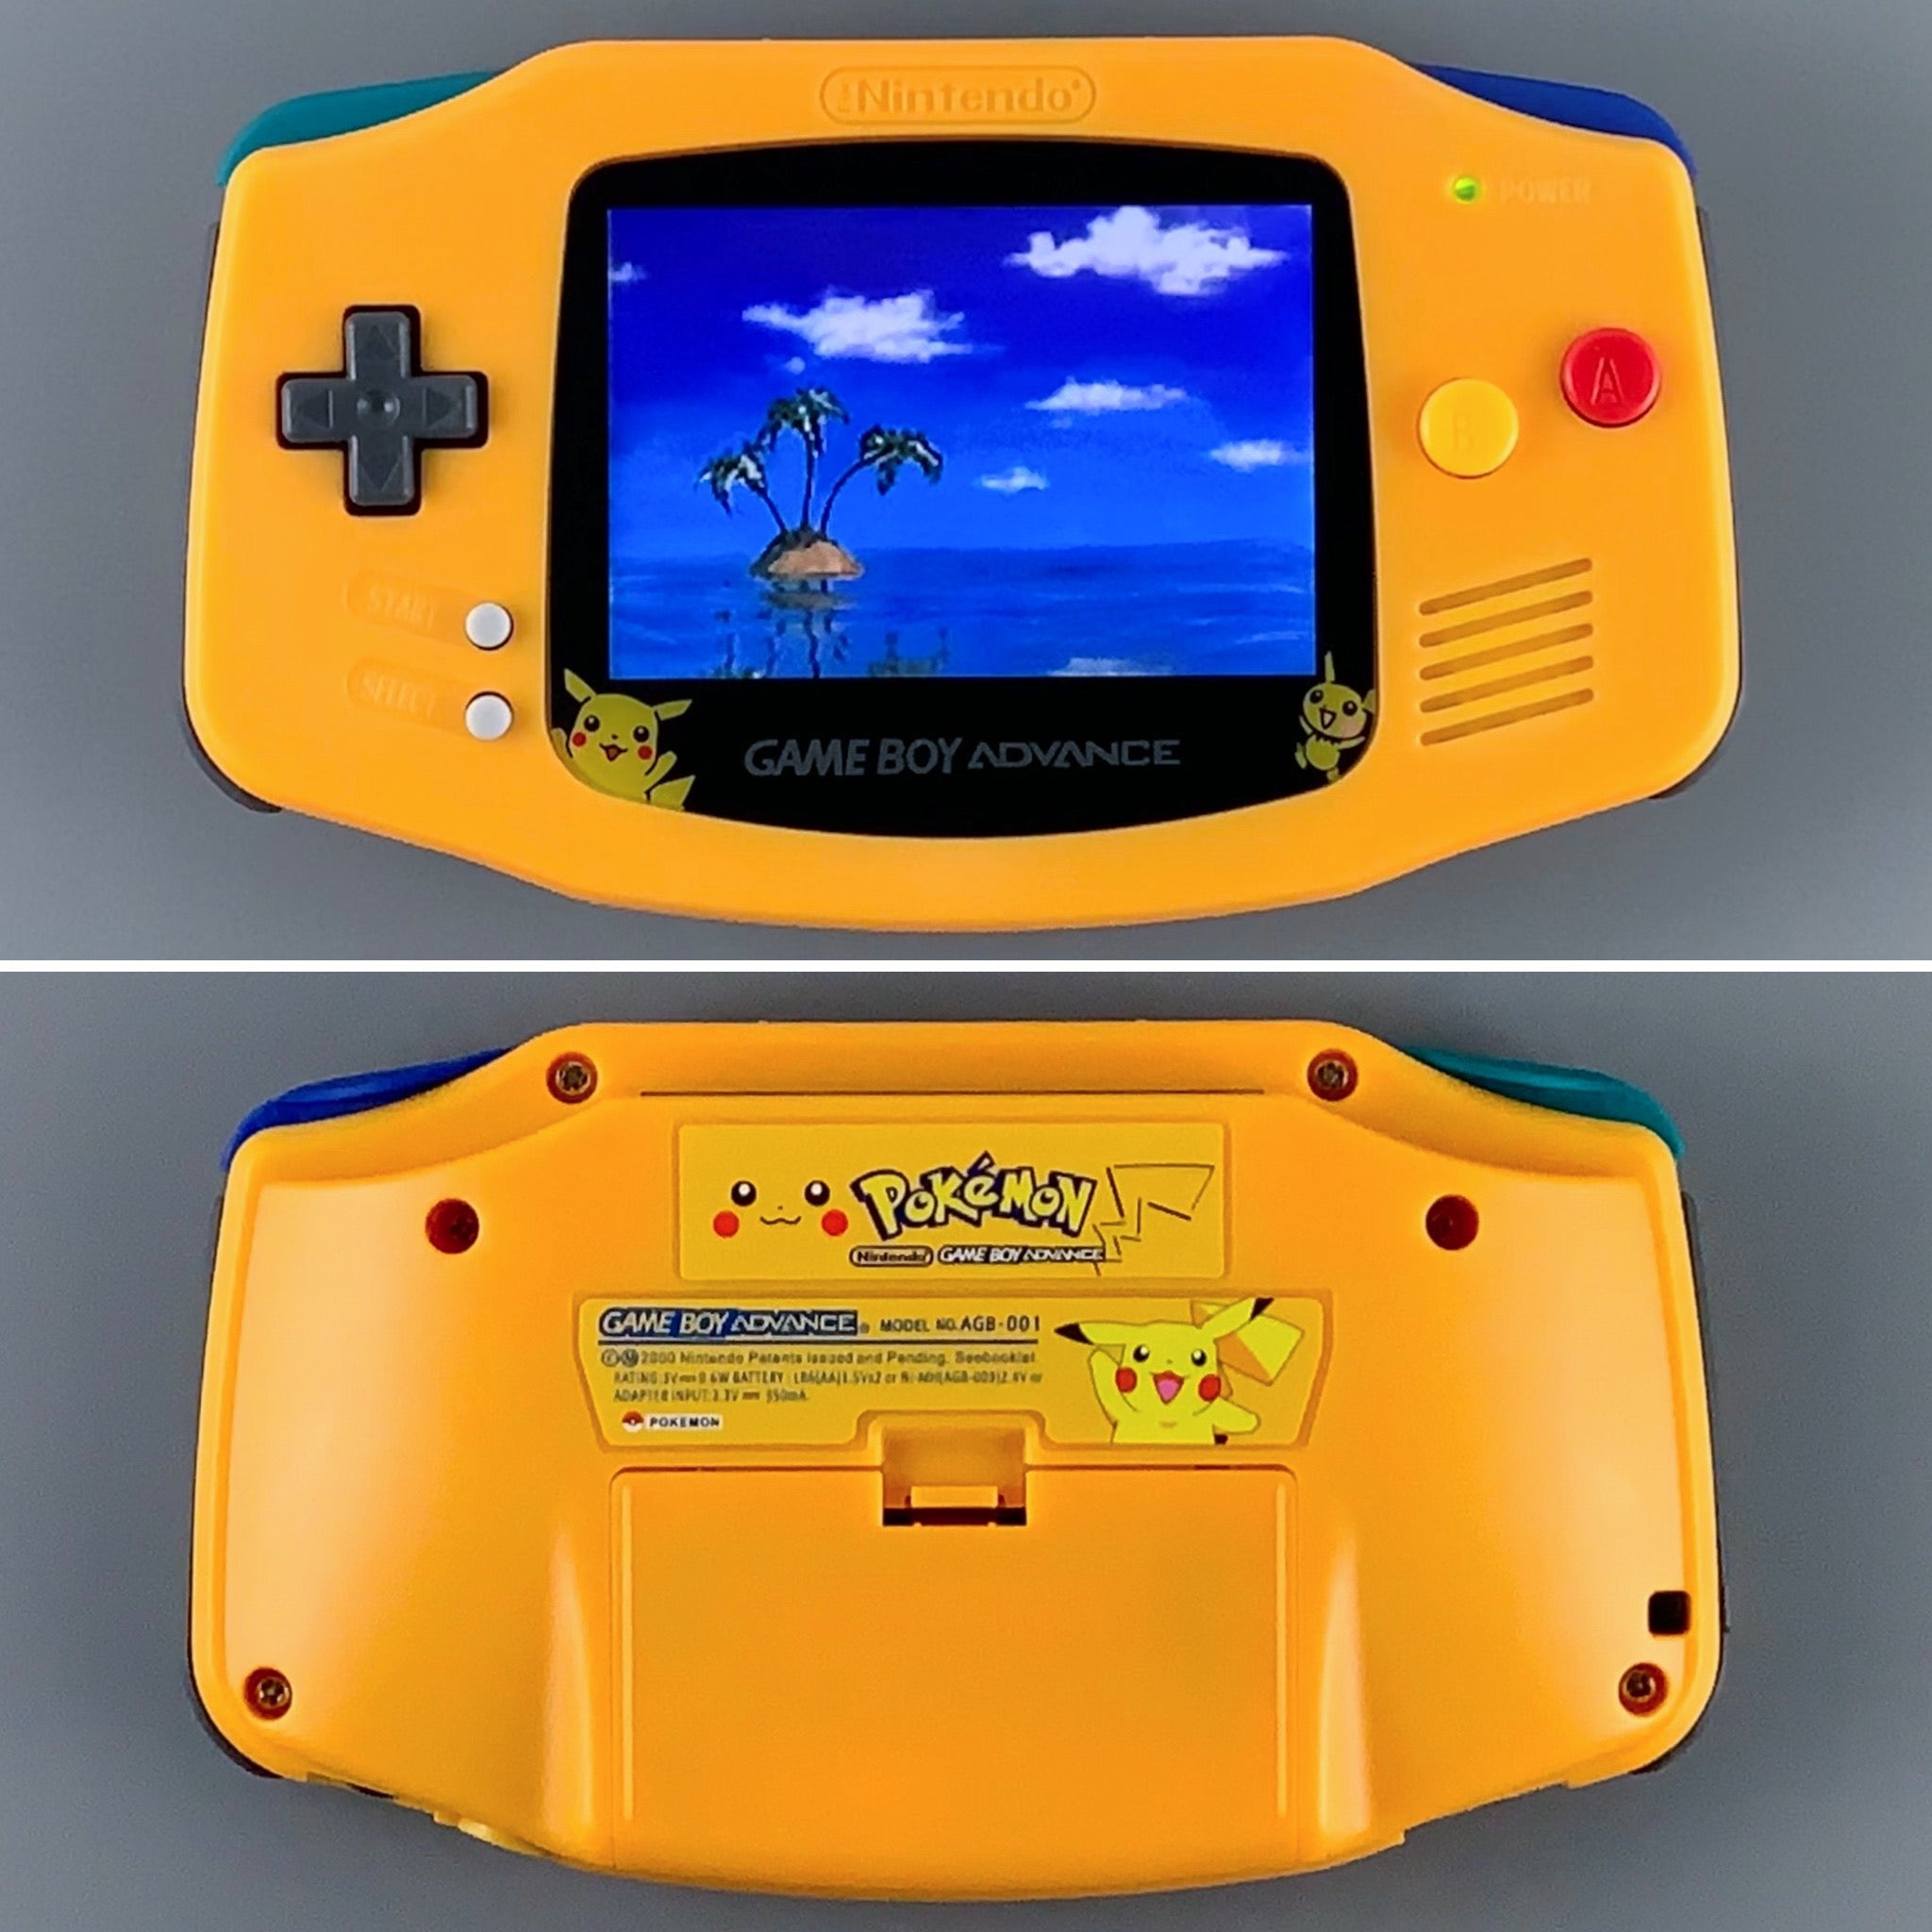 Pokemon Lightning Yellow Nintendo Game Boy Advance GBA Video 